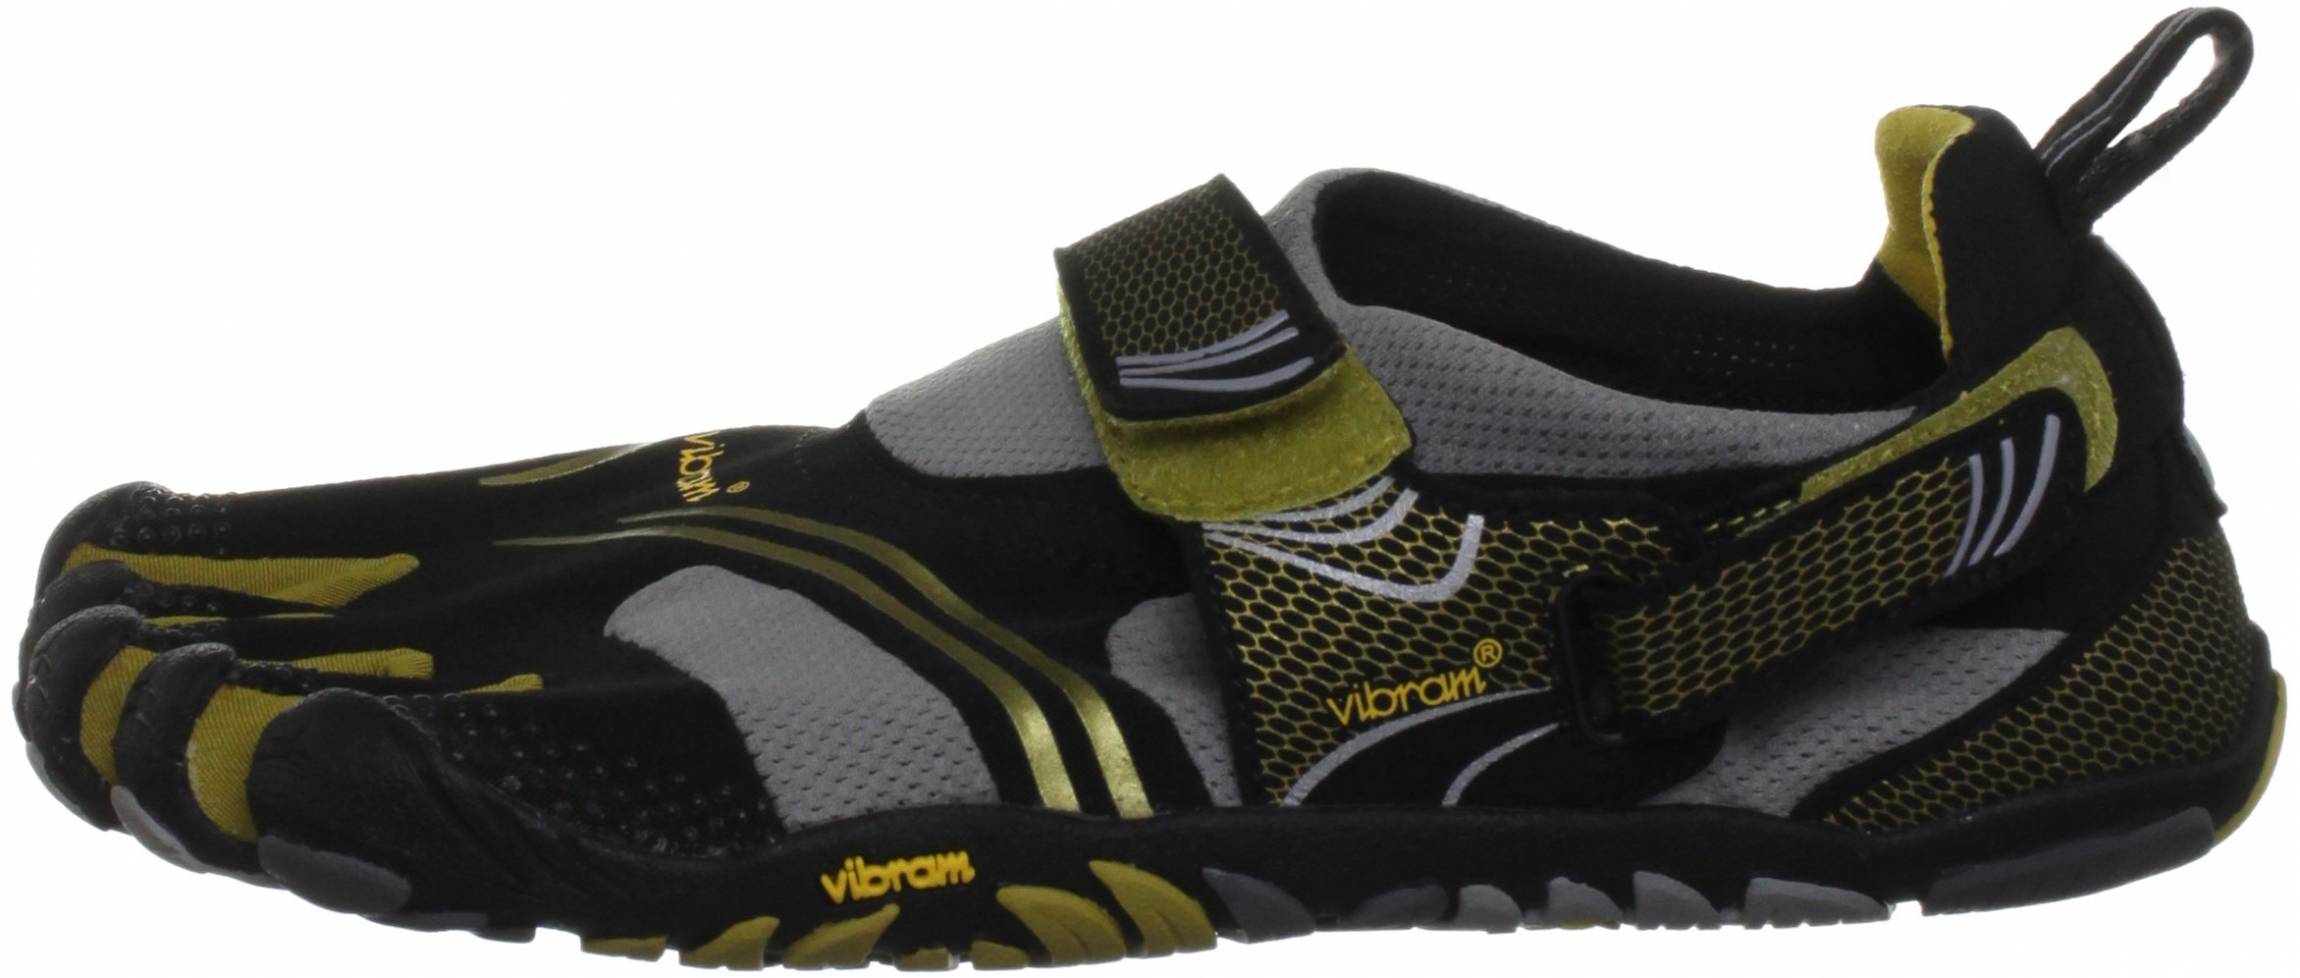 vibram road running shoes